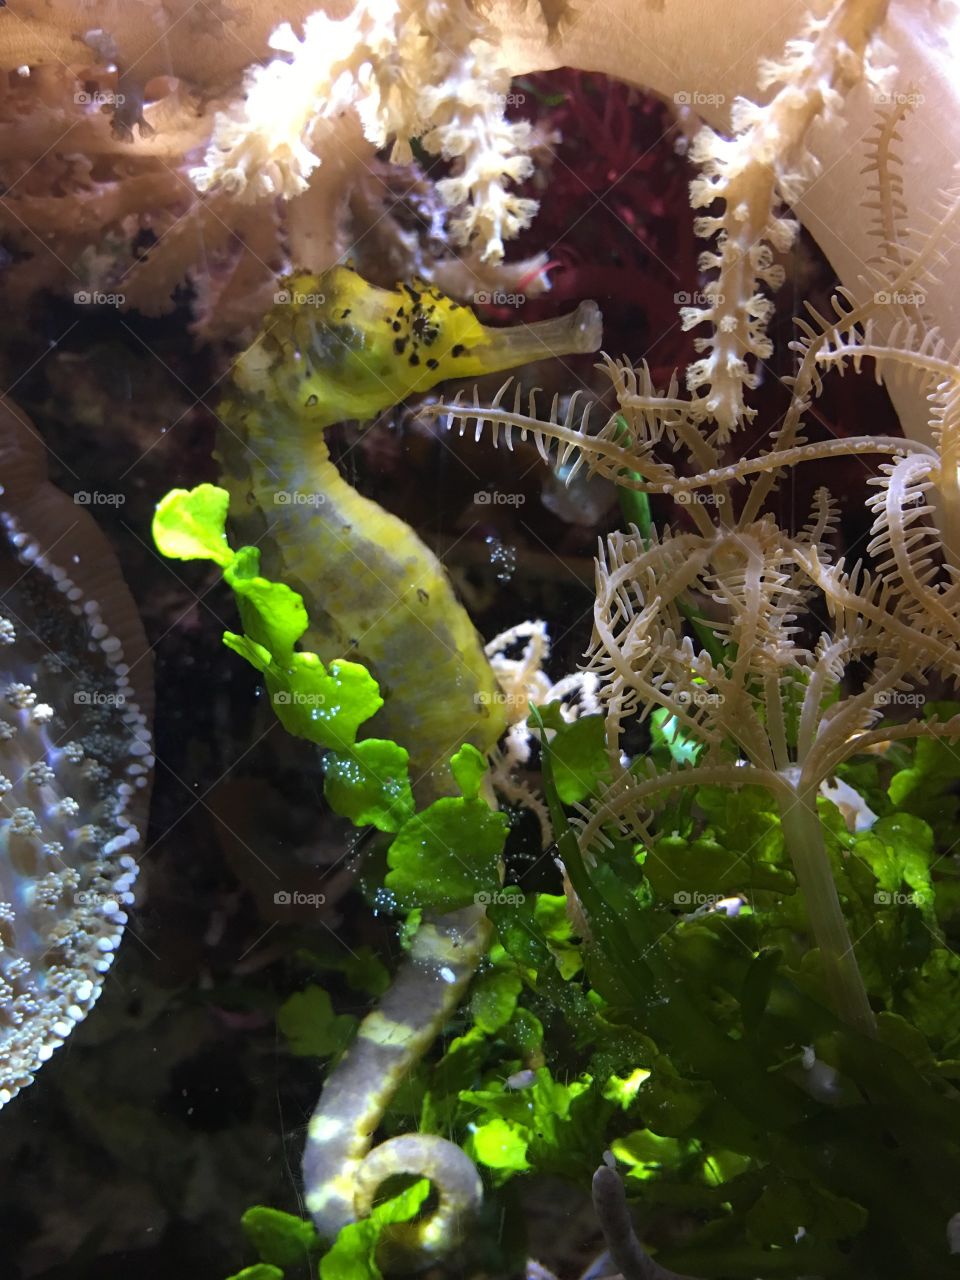 Sea Horse hiding in the plants